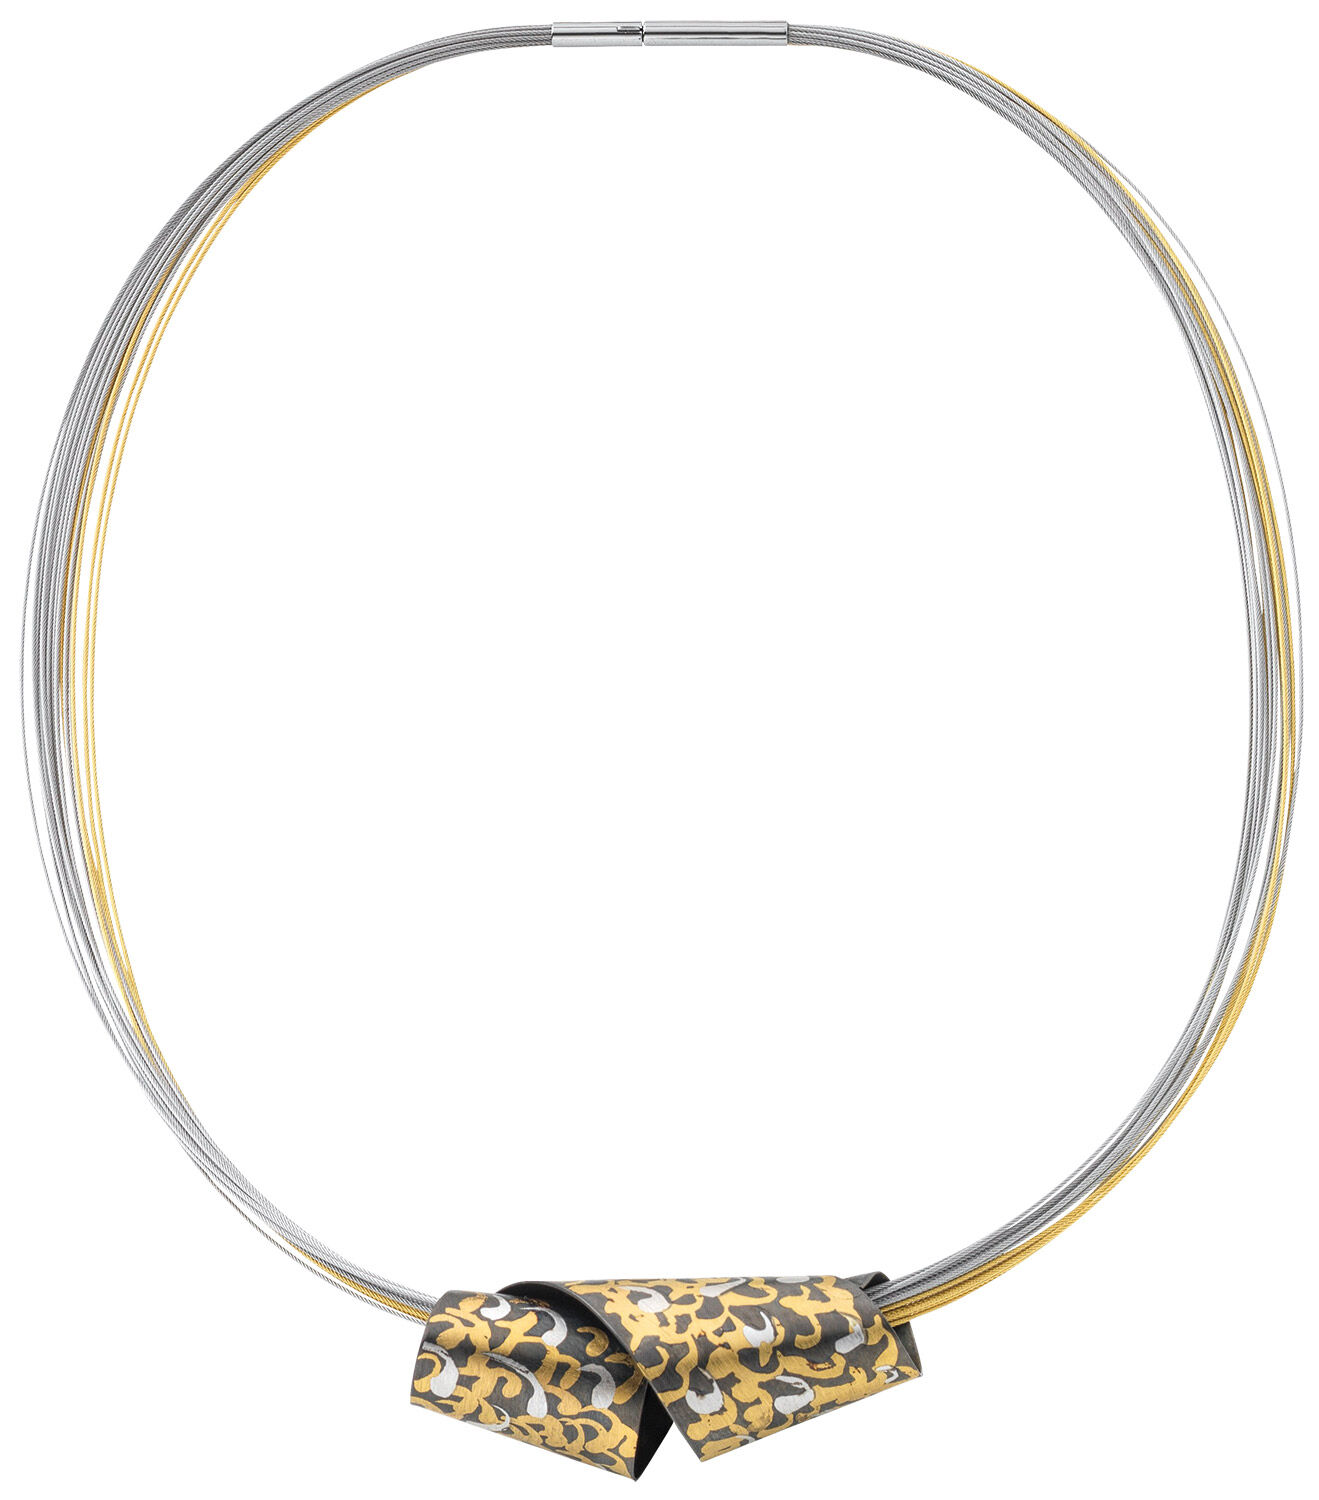 Necklace "Tigre" by Kreuchauff-Design